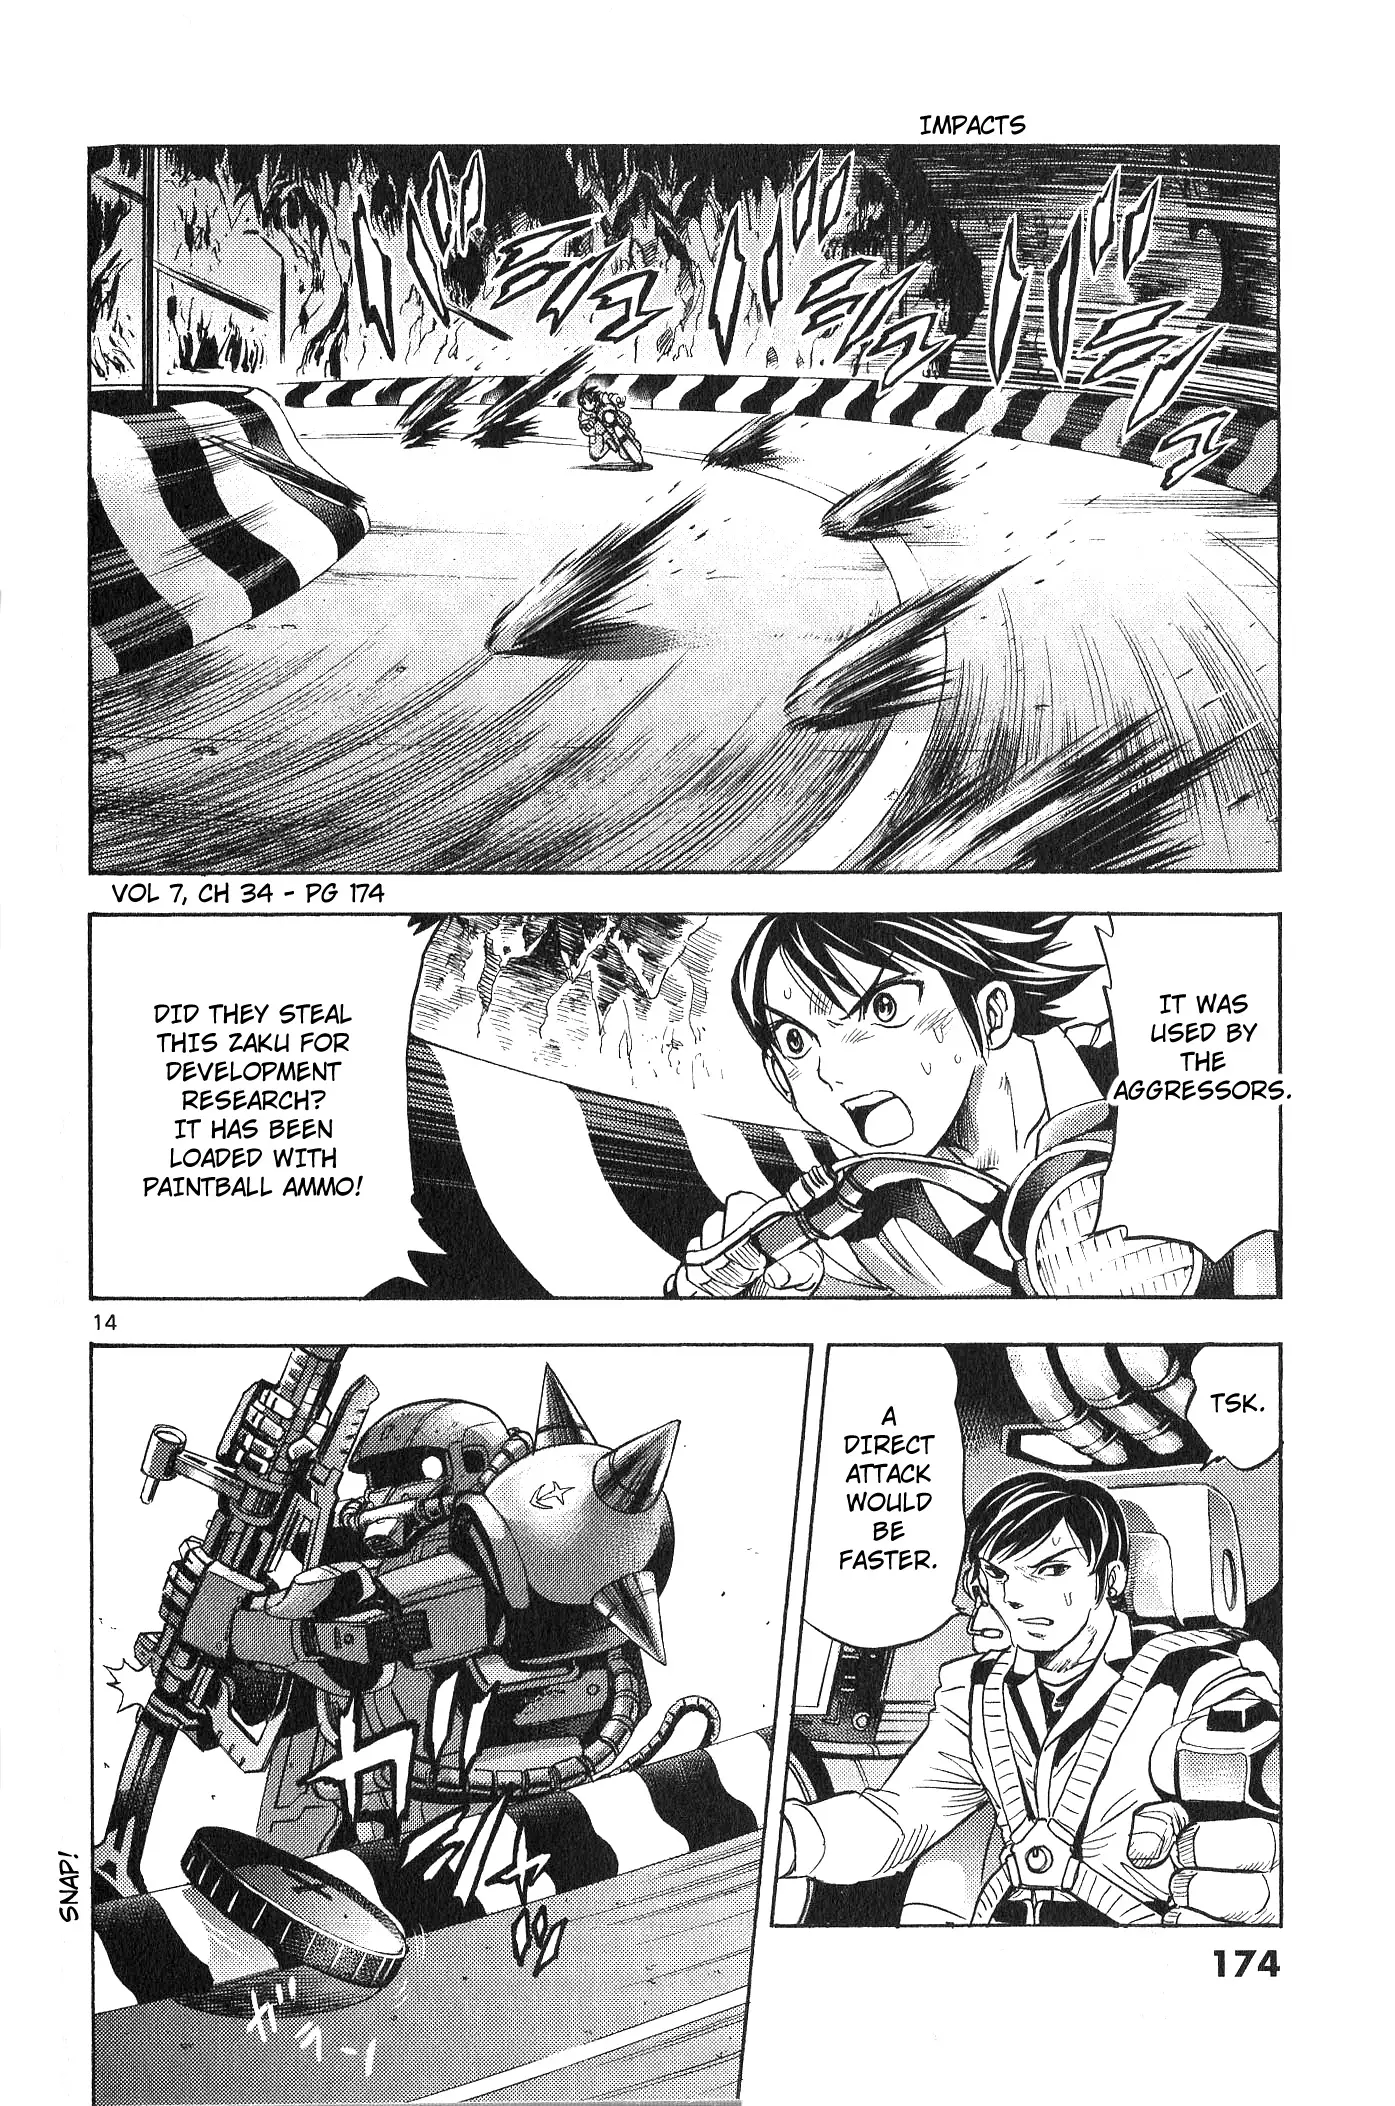 Mobile Suit Gundam Aggressor - 34 page 14-0874f202